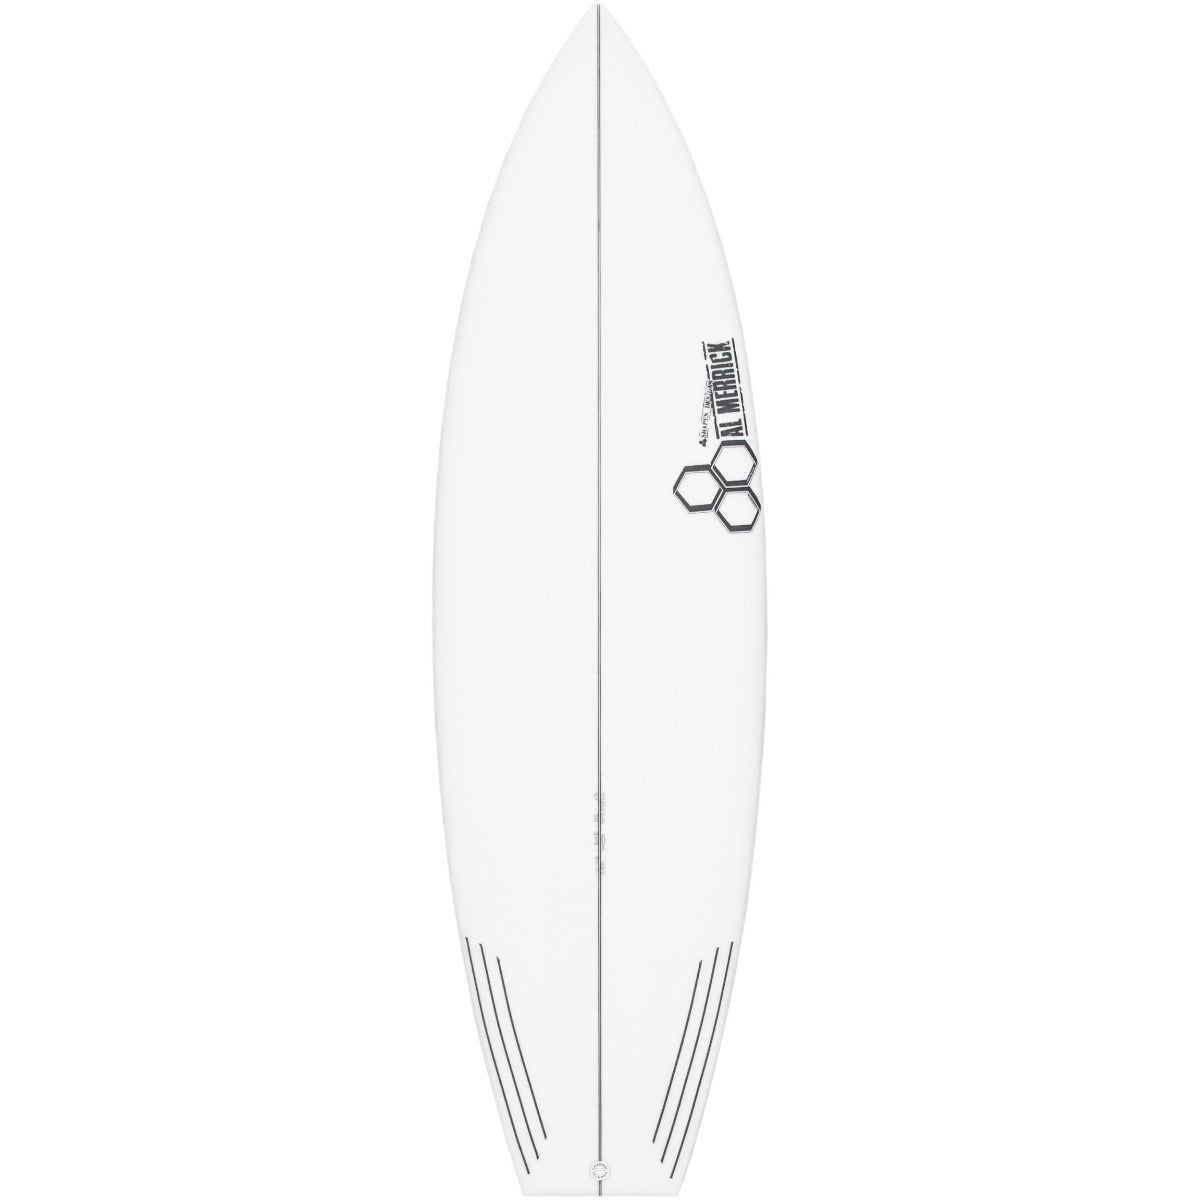 channel-islands-surfboards-neckbeard2-surfboard-al-merrick-high-performance-galway-ireland-blacksheepsurfco-deck